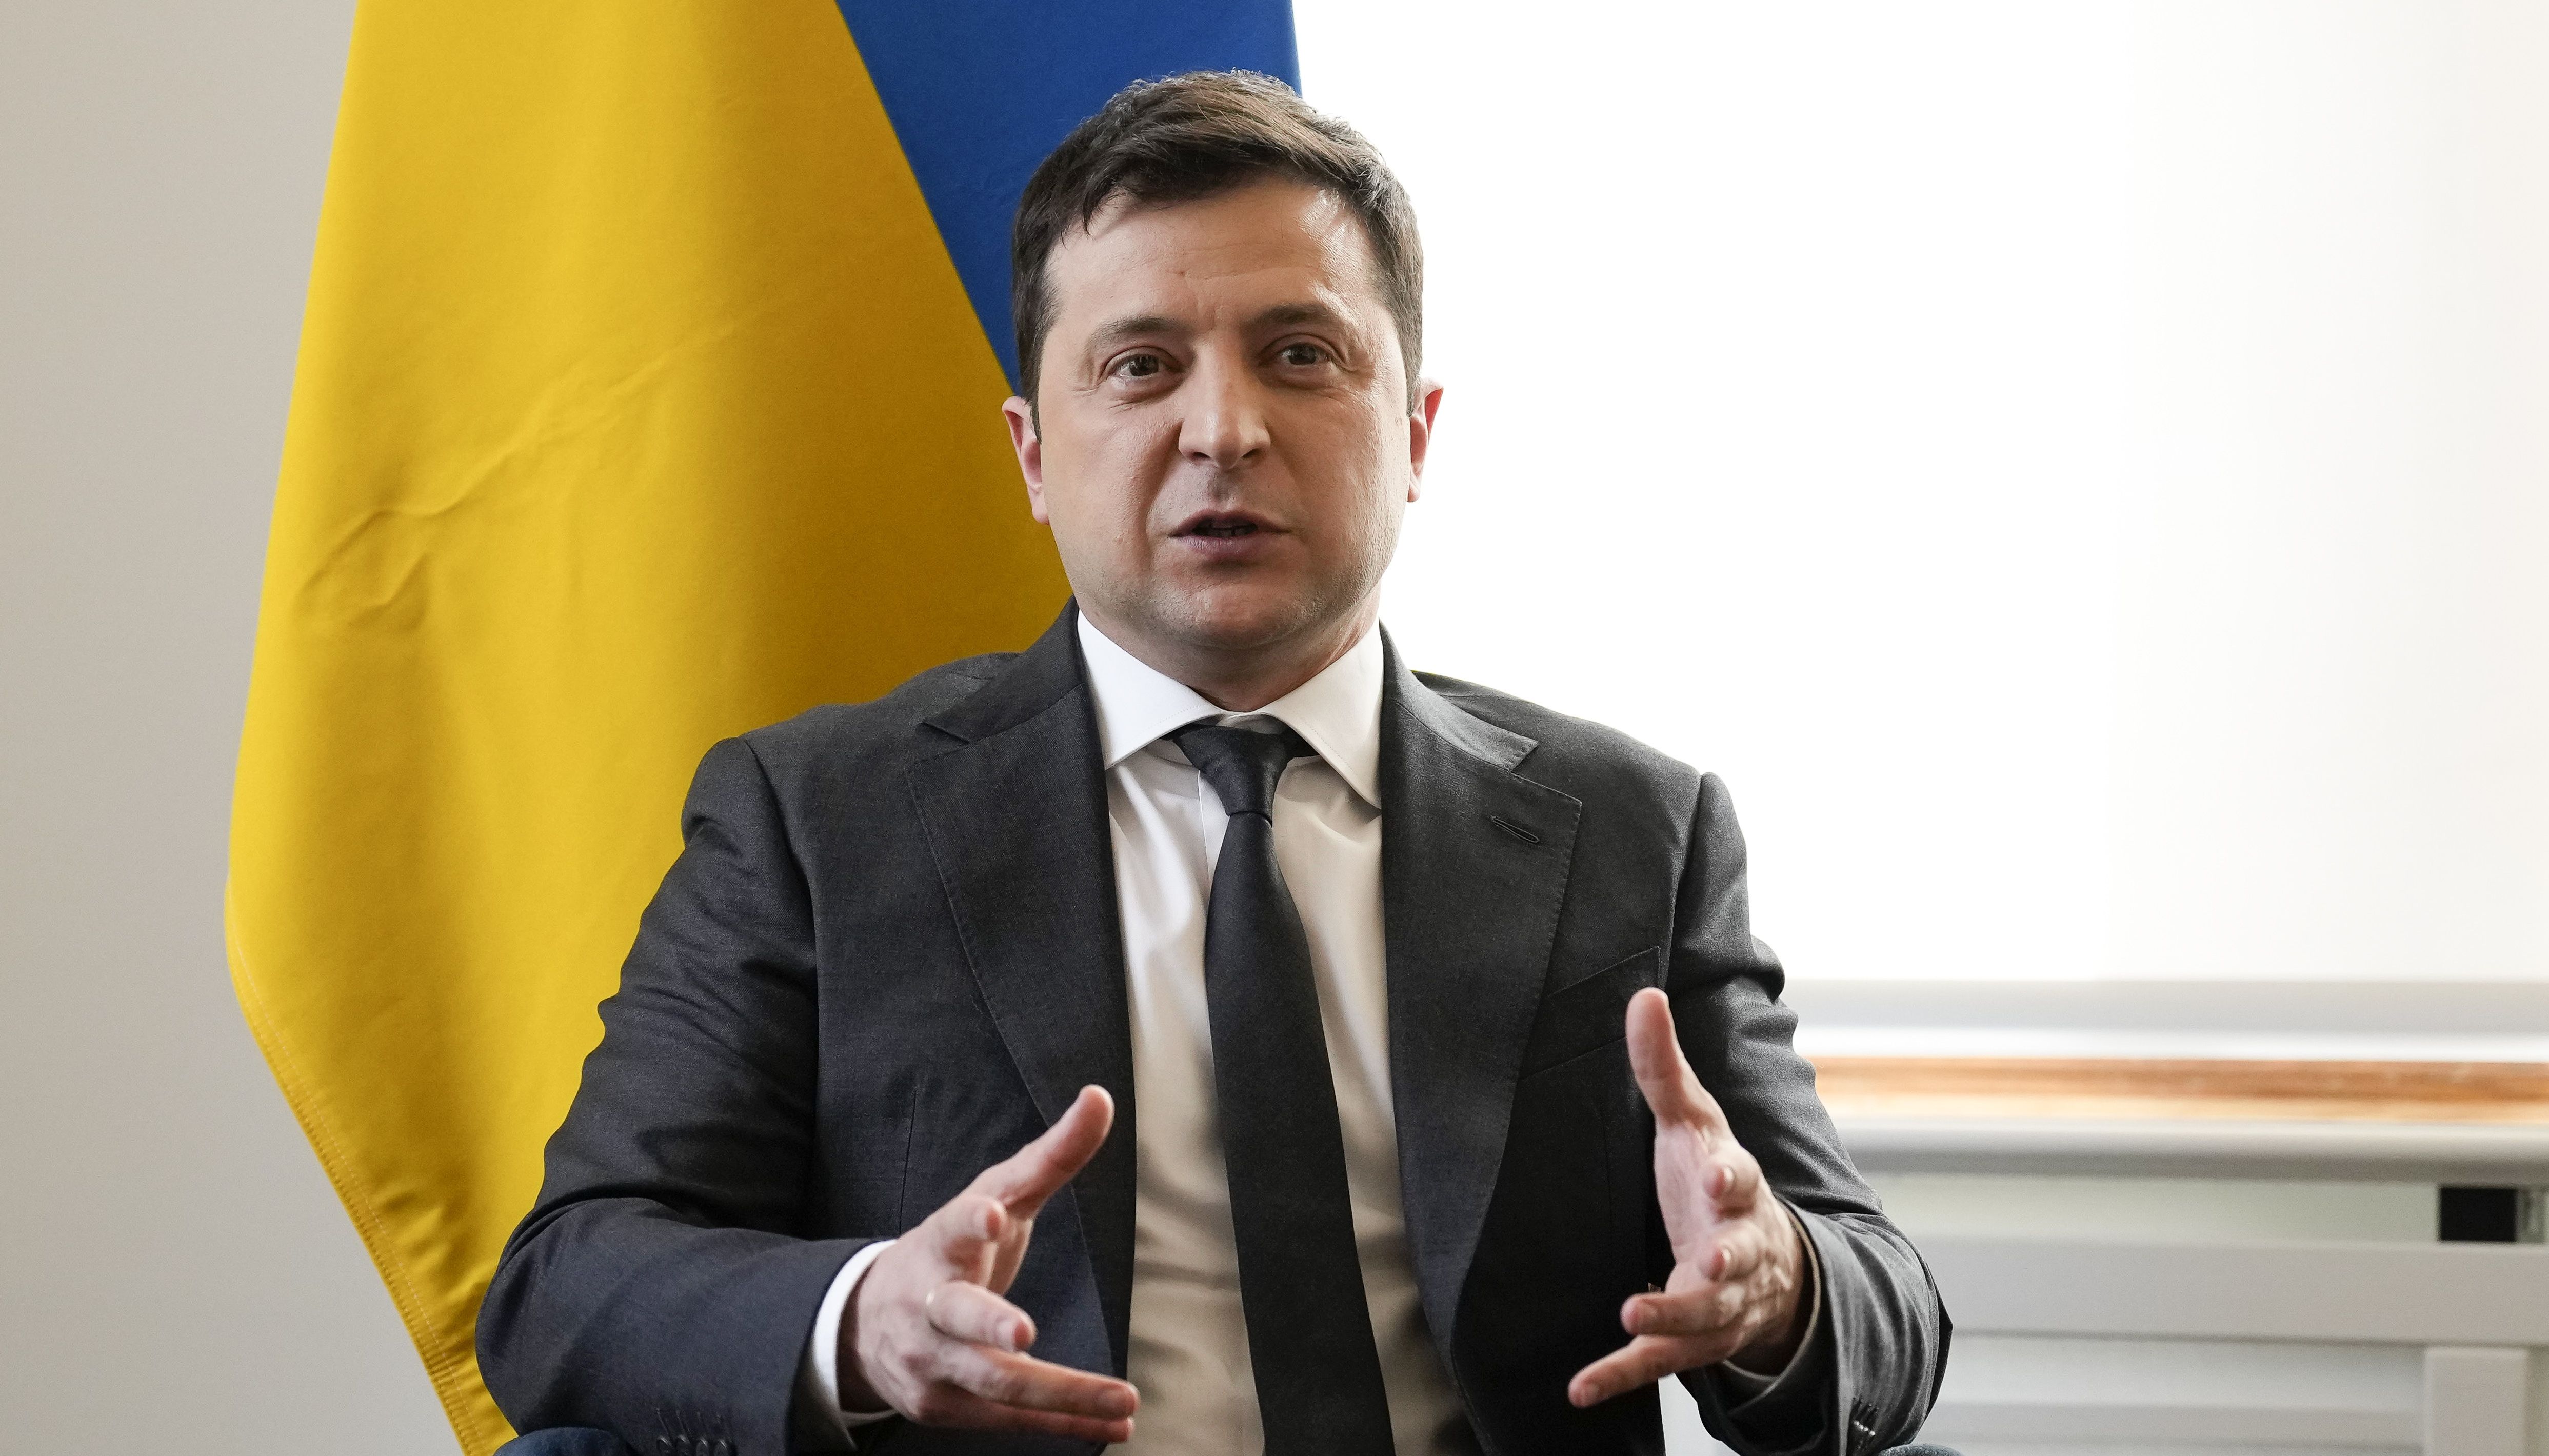 Ukrainian President Volodymyr Zelenskyy says Mr Abramovich is ready to help